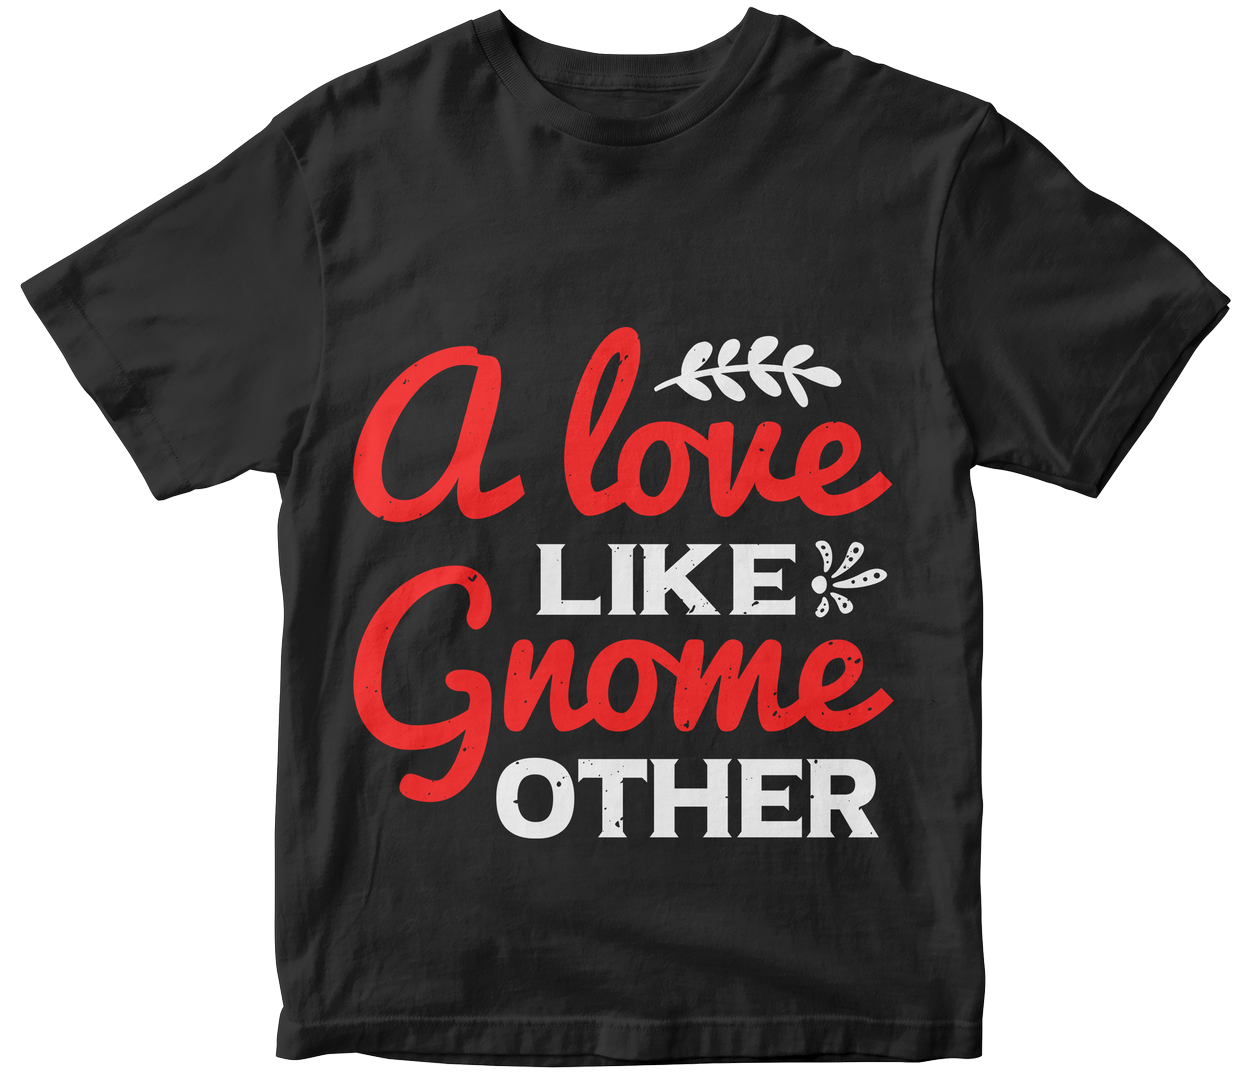 50-customizable-gnome-tshirt-design-bundle